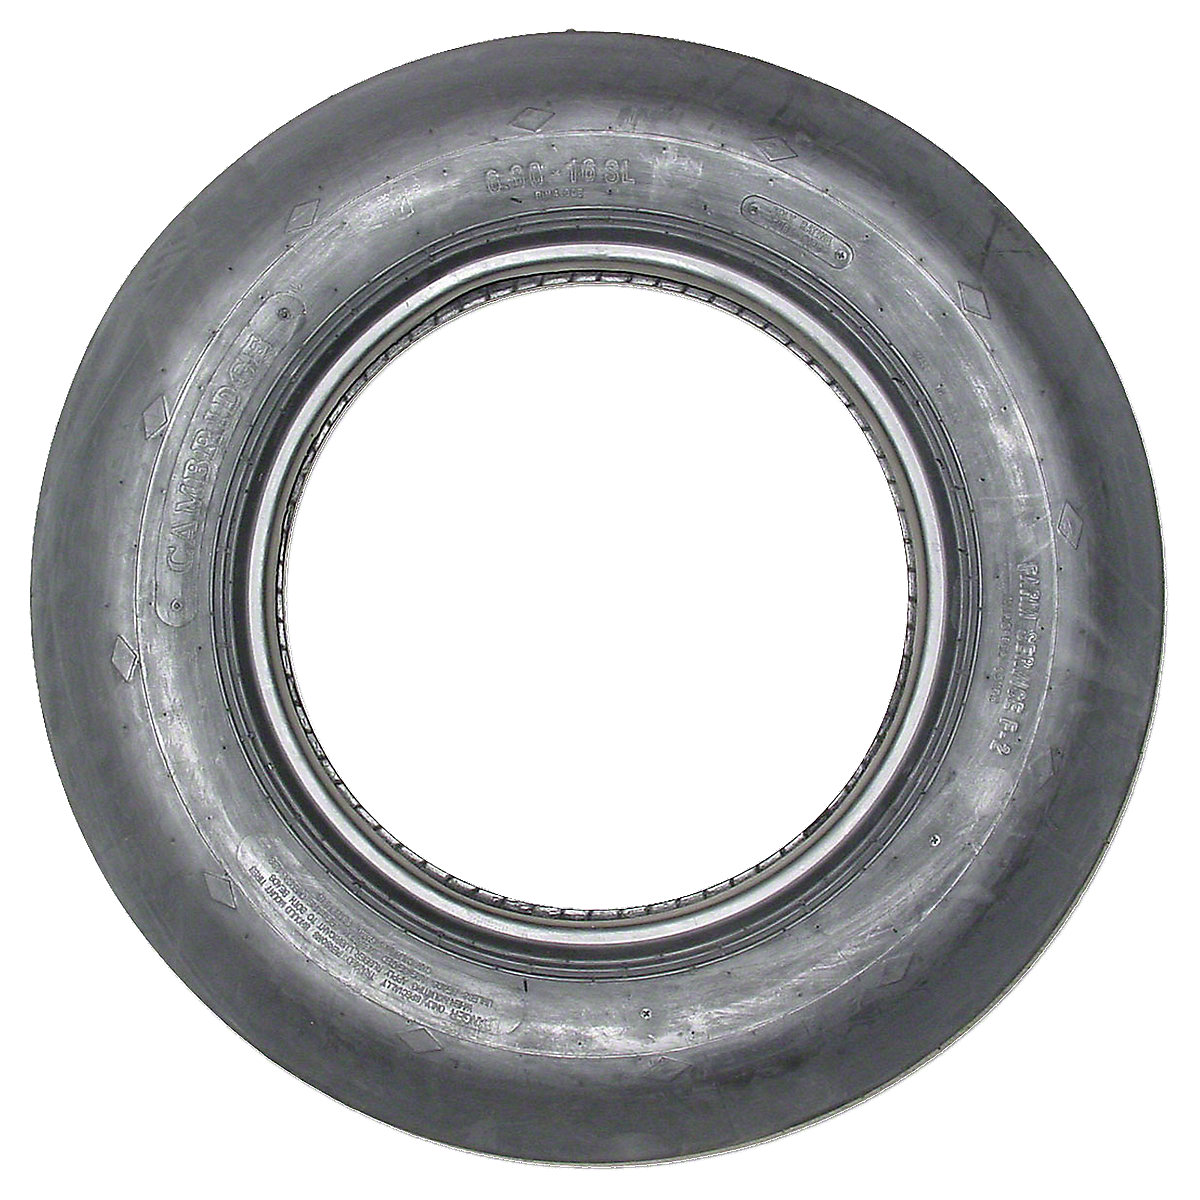 Tire Triple Rib, 4 Ply Only (6.00 X 16)